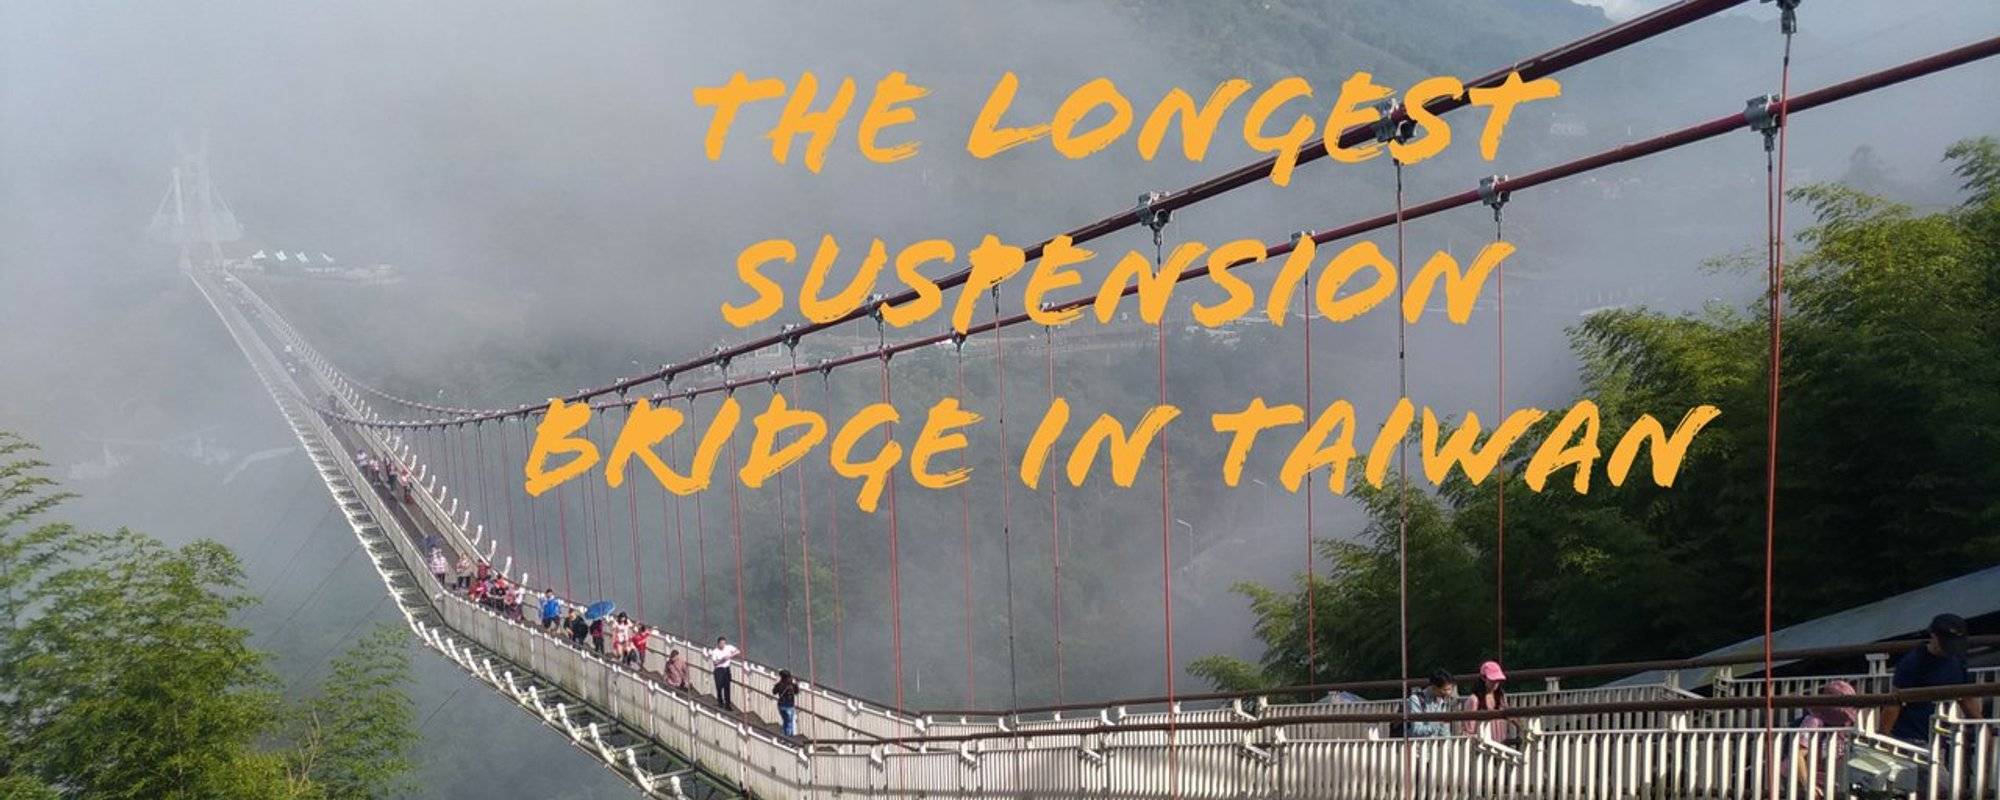 The longest suspension bridge in Taiwan